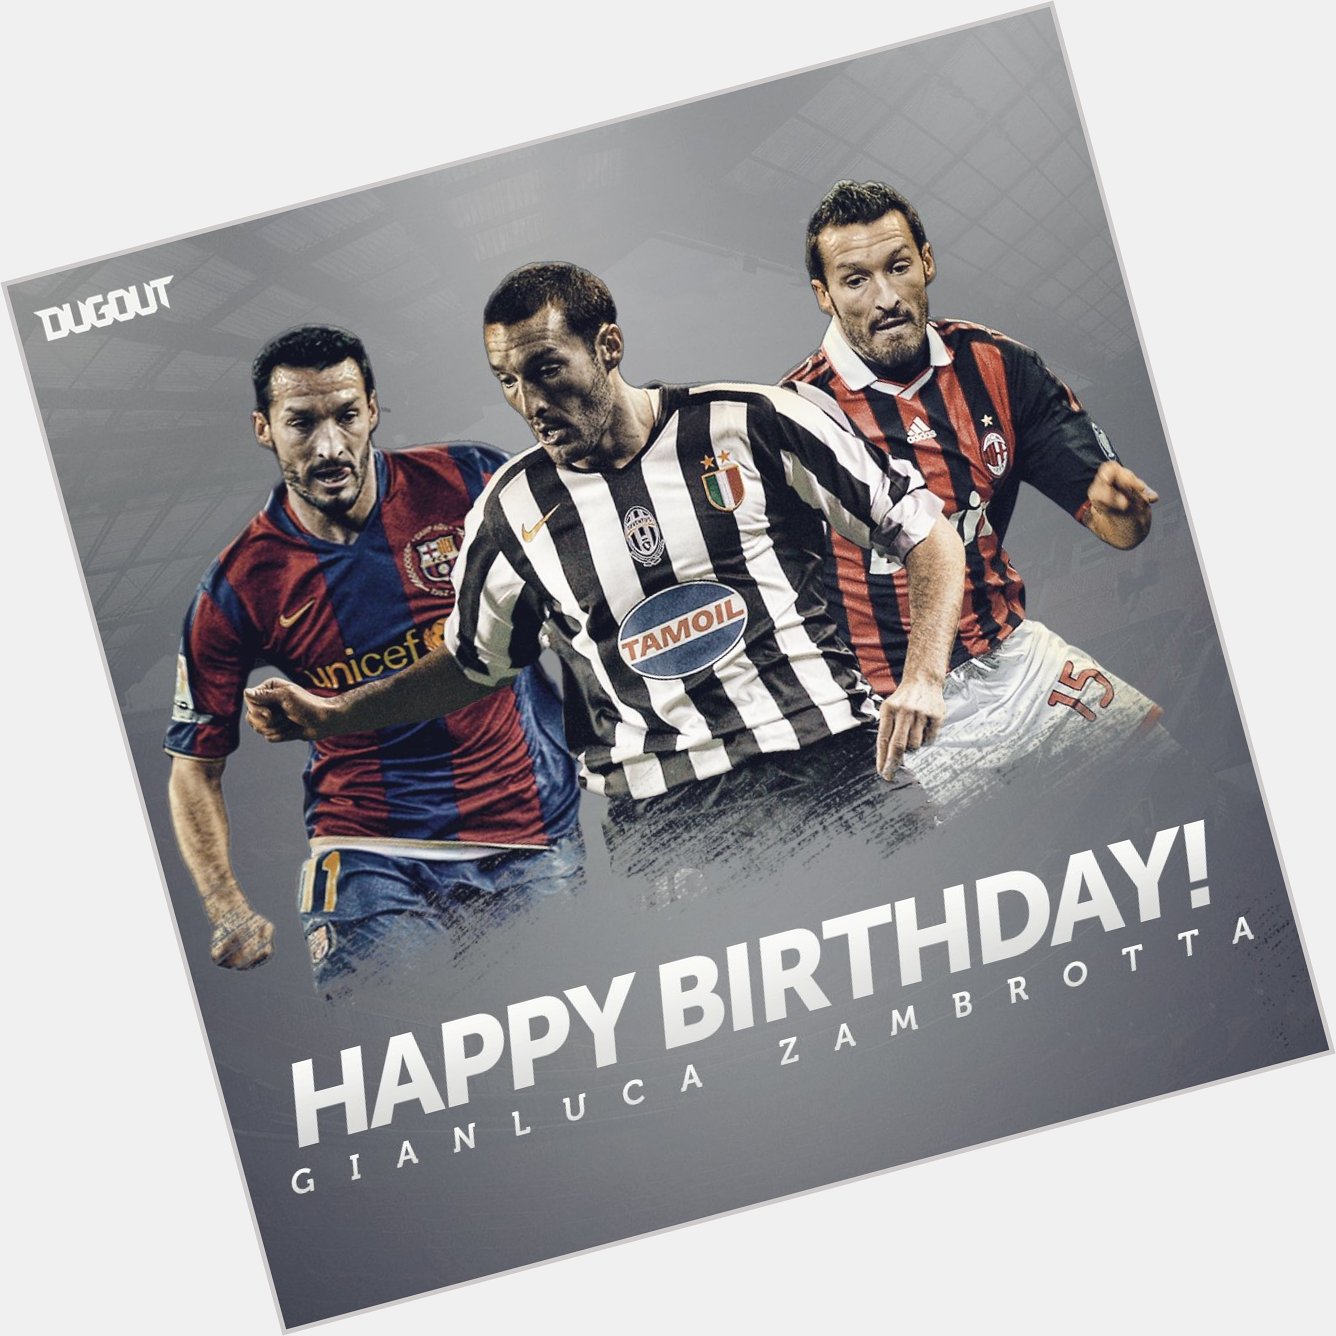  Happy birthday to the legendary Gianluca Zambrotta 